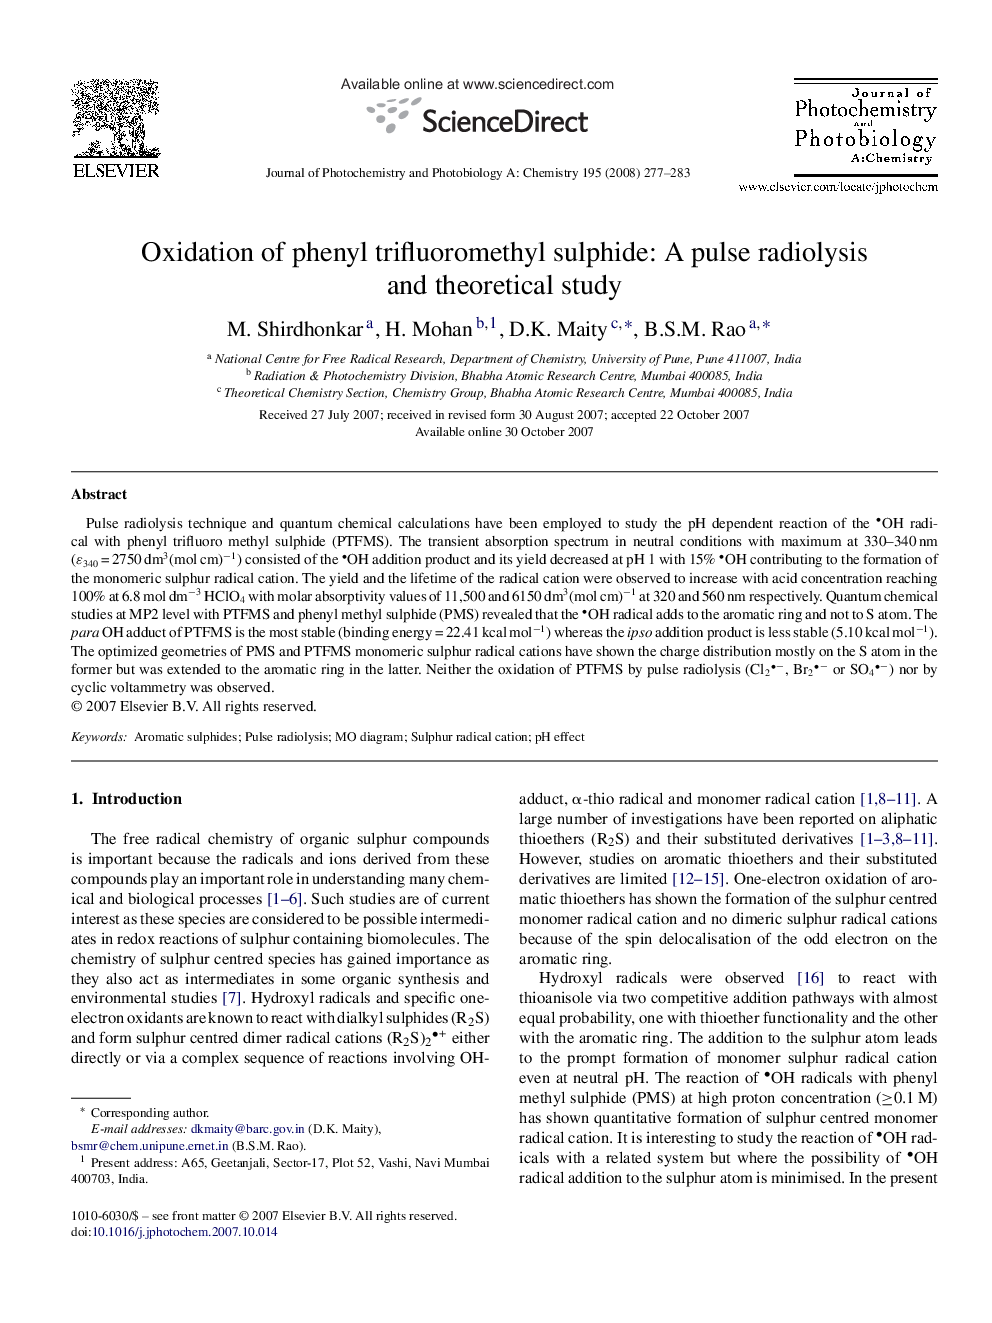 Oxidation of phenyl trifluoromethyl sulphide: A pulse radiolysis and theoretical study